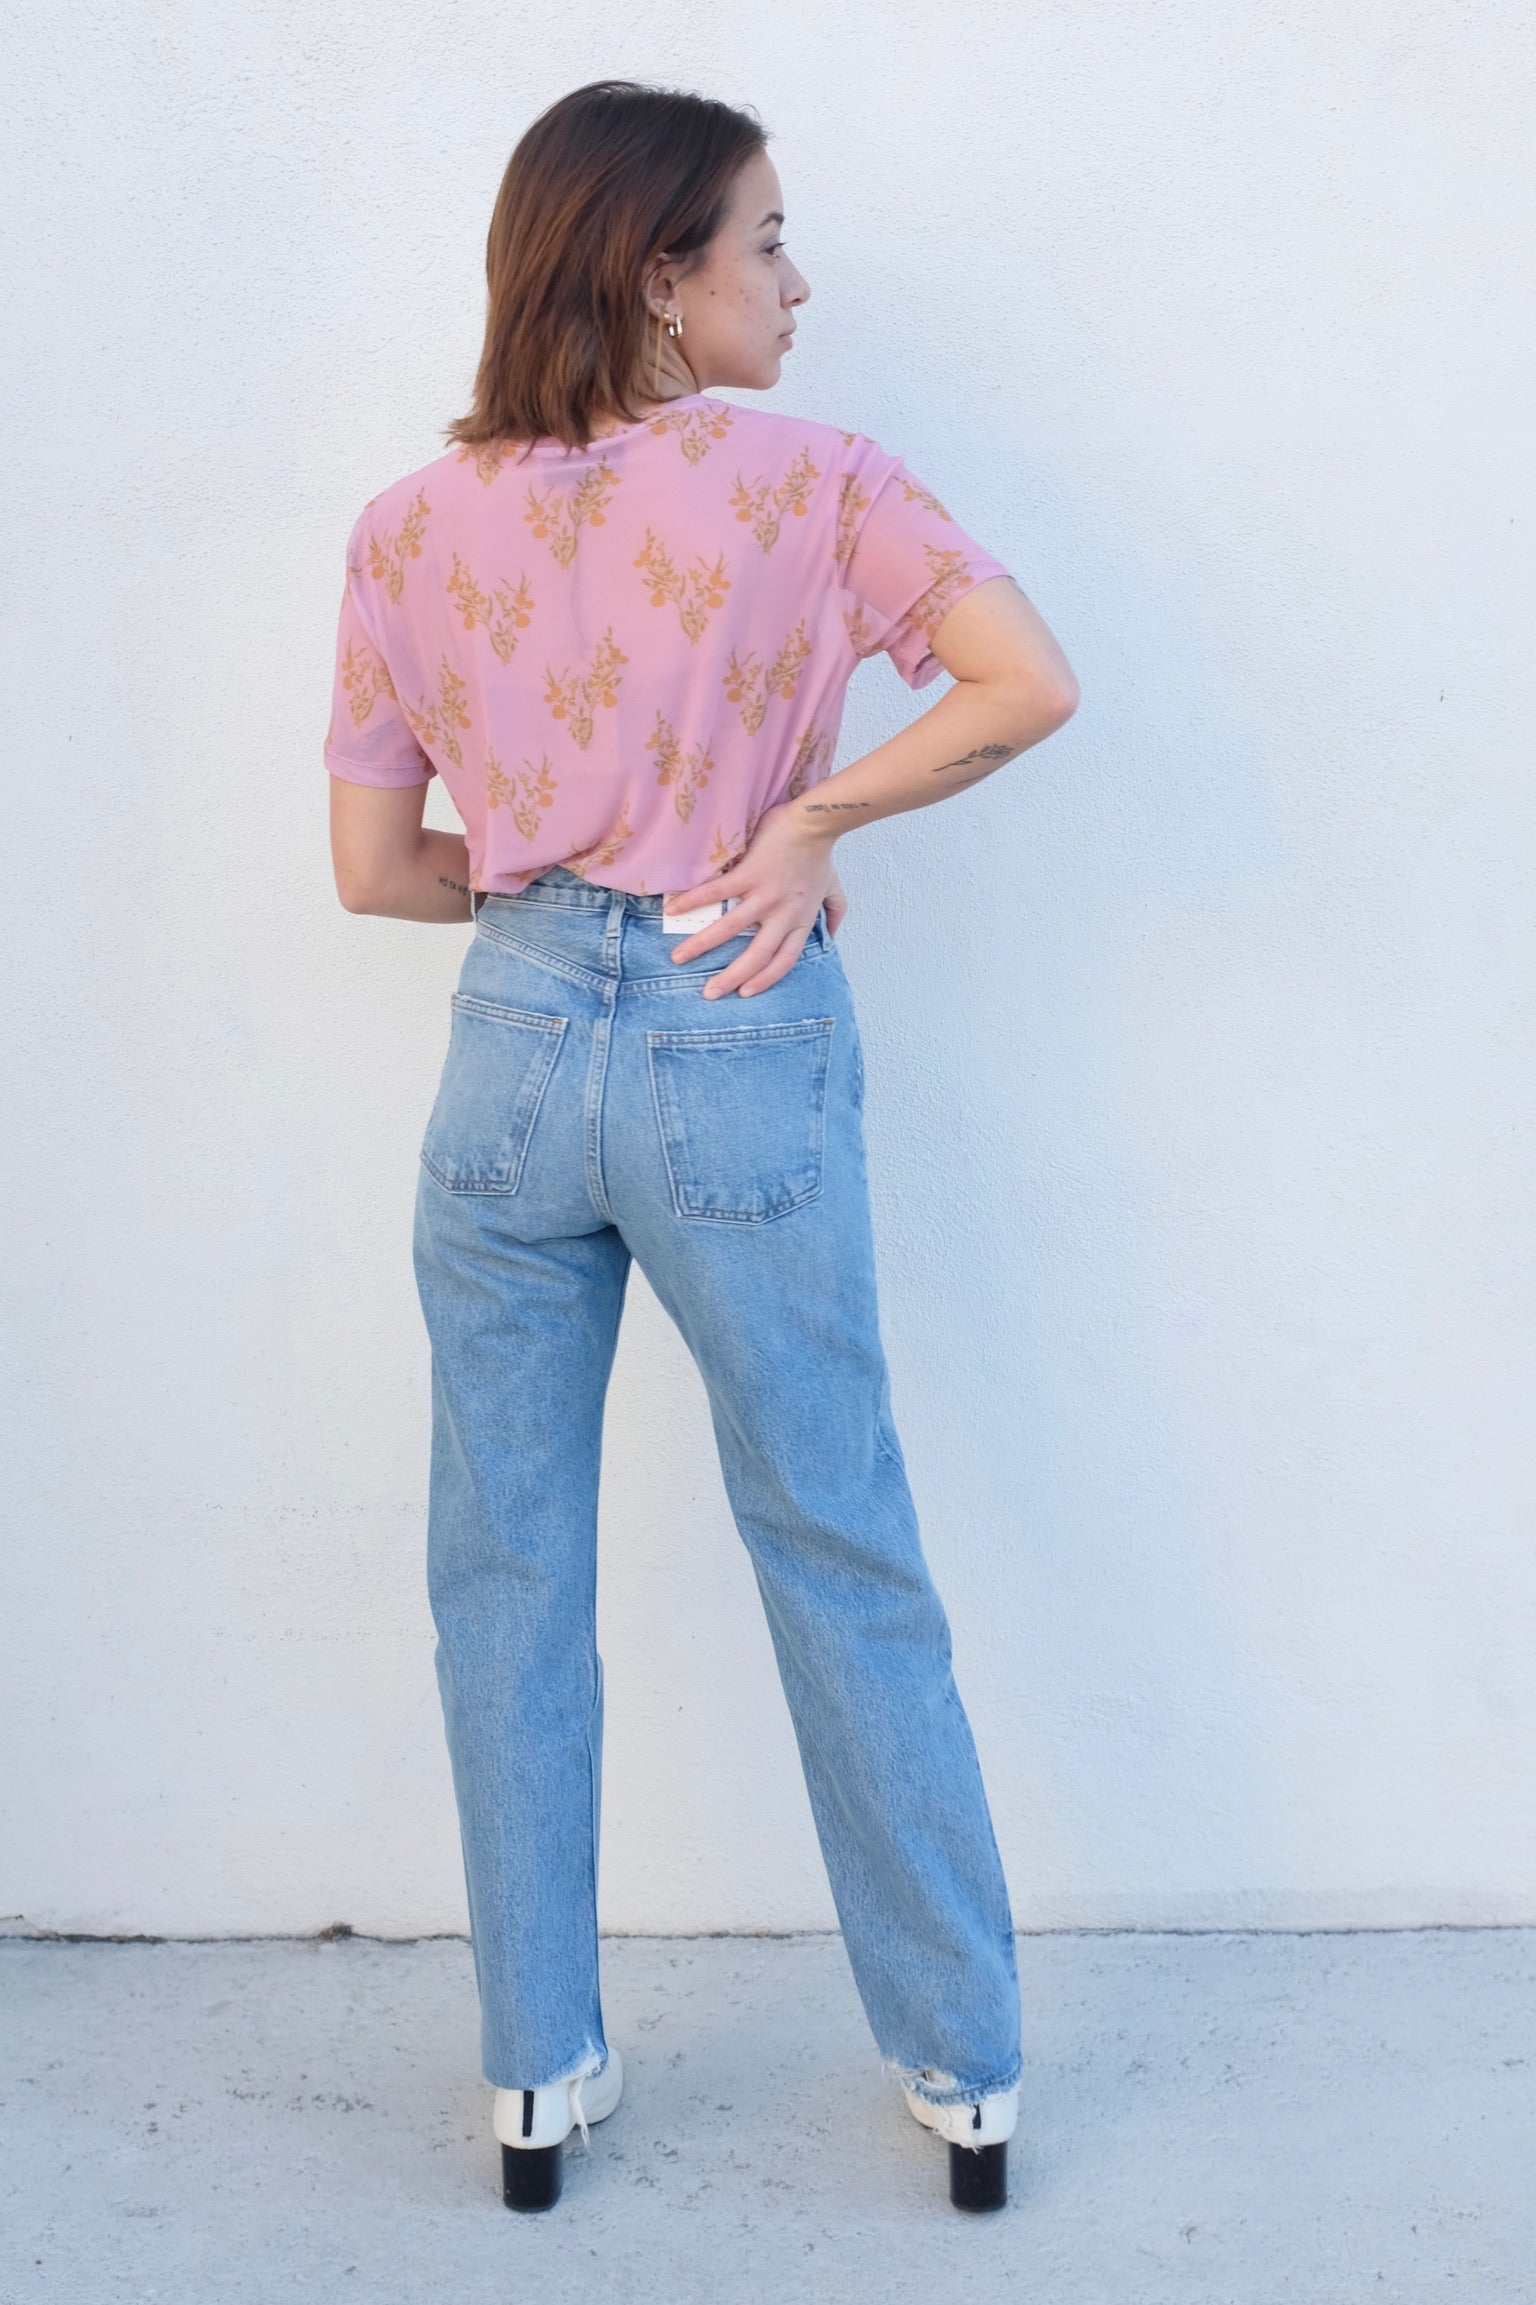 90's Jeans Loose, DEFSHOP